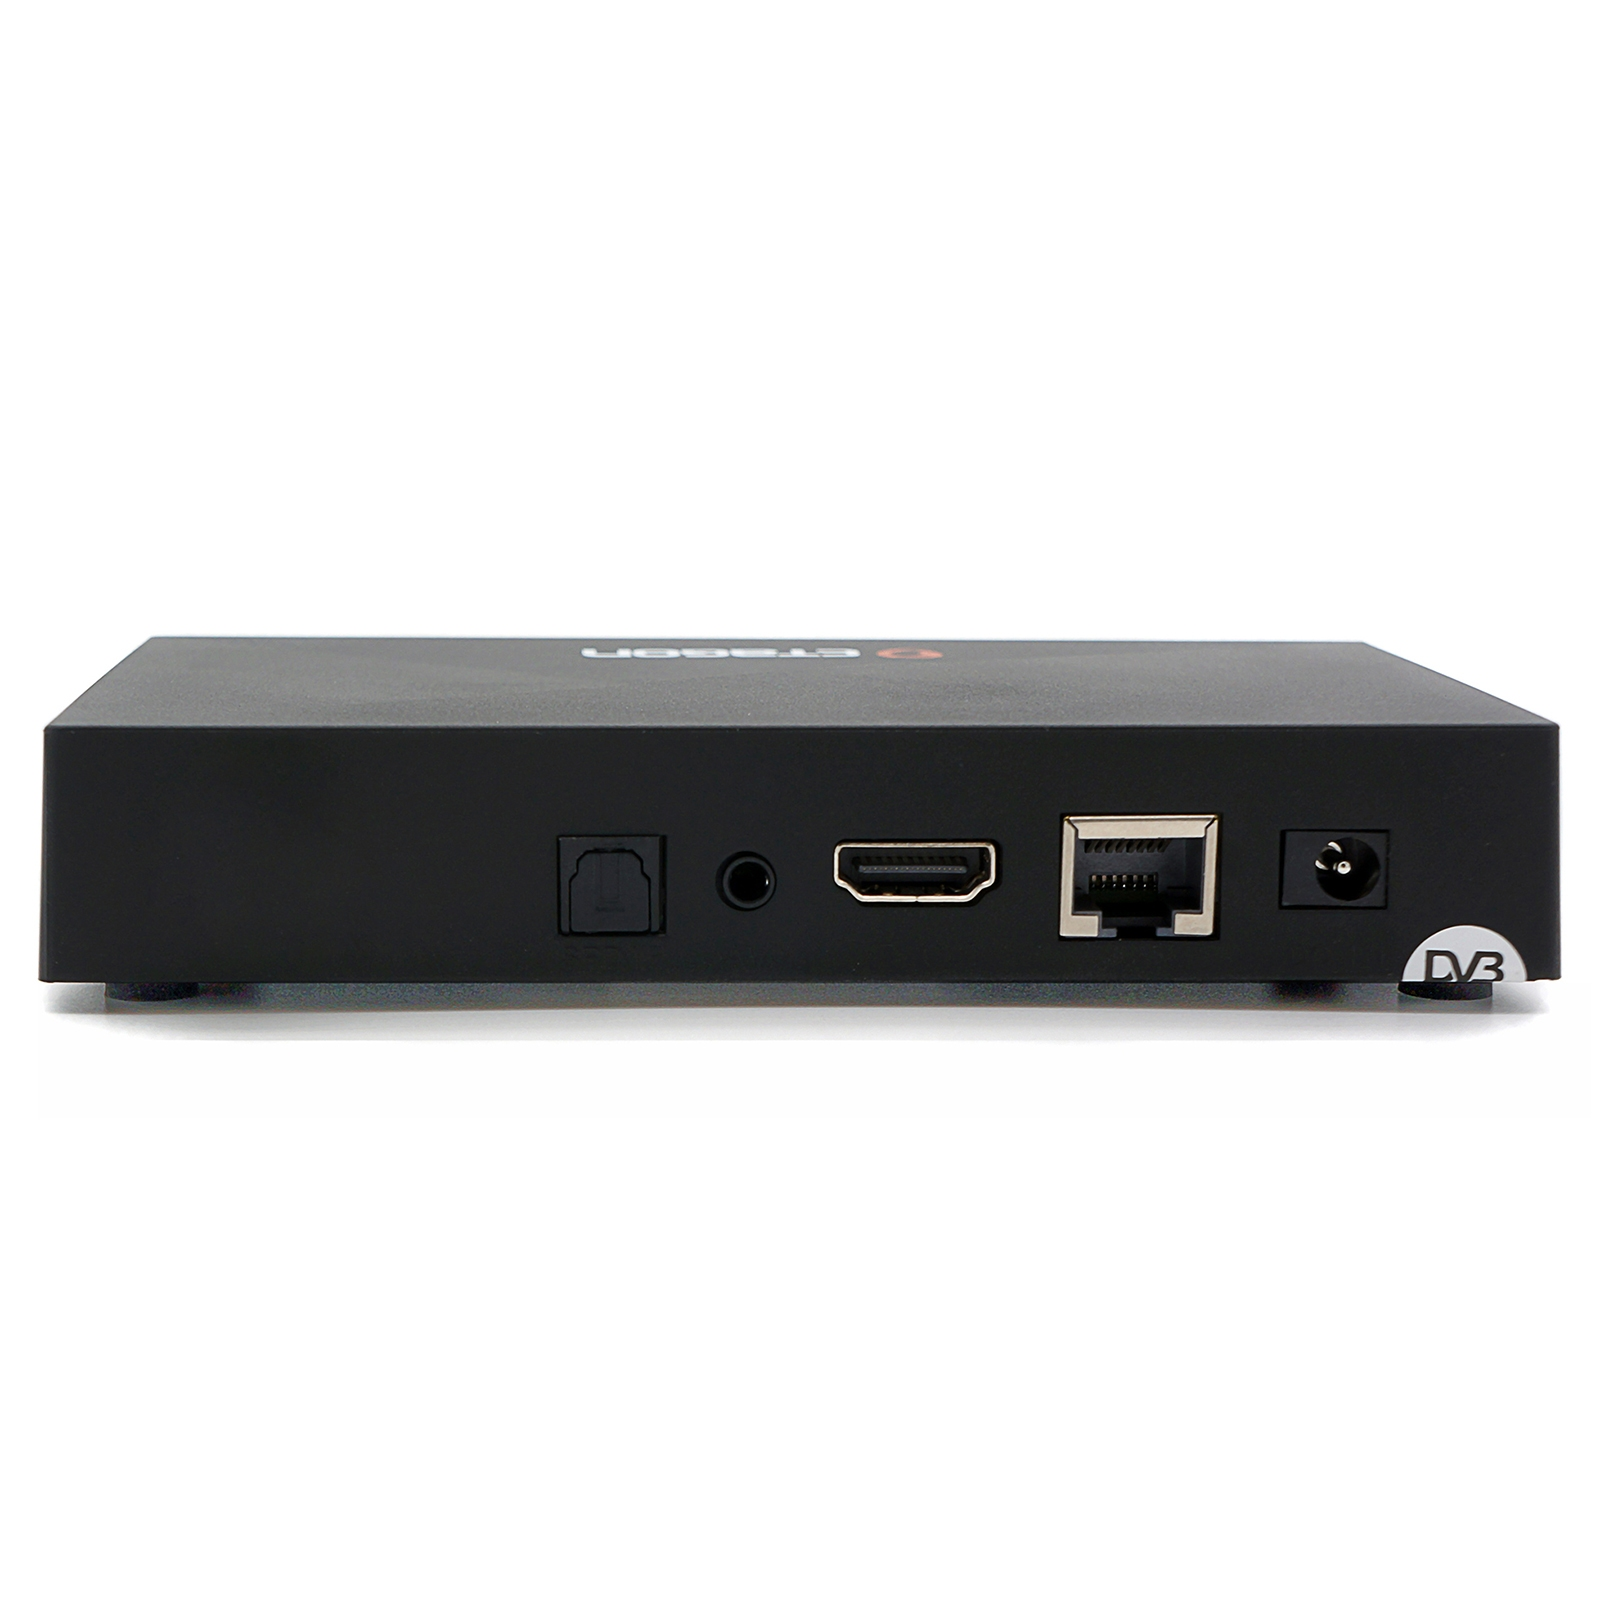 OCTAGON SX889 Full HD IP Linux LAN H.265 Mediaplayer HDMI TV Full (Schwarz) Mediaplayer HD IP